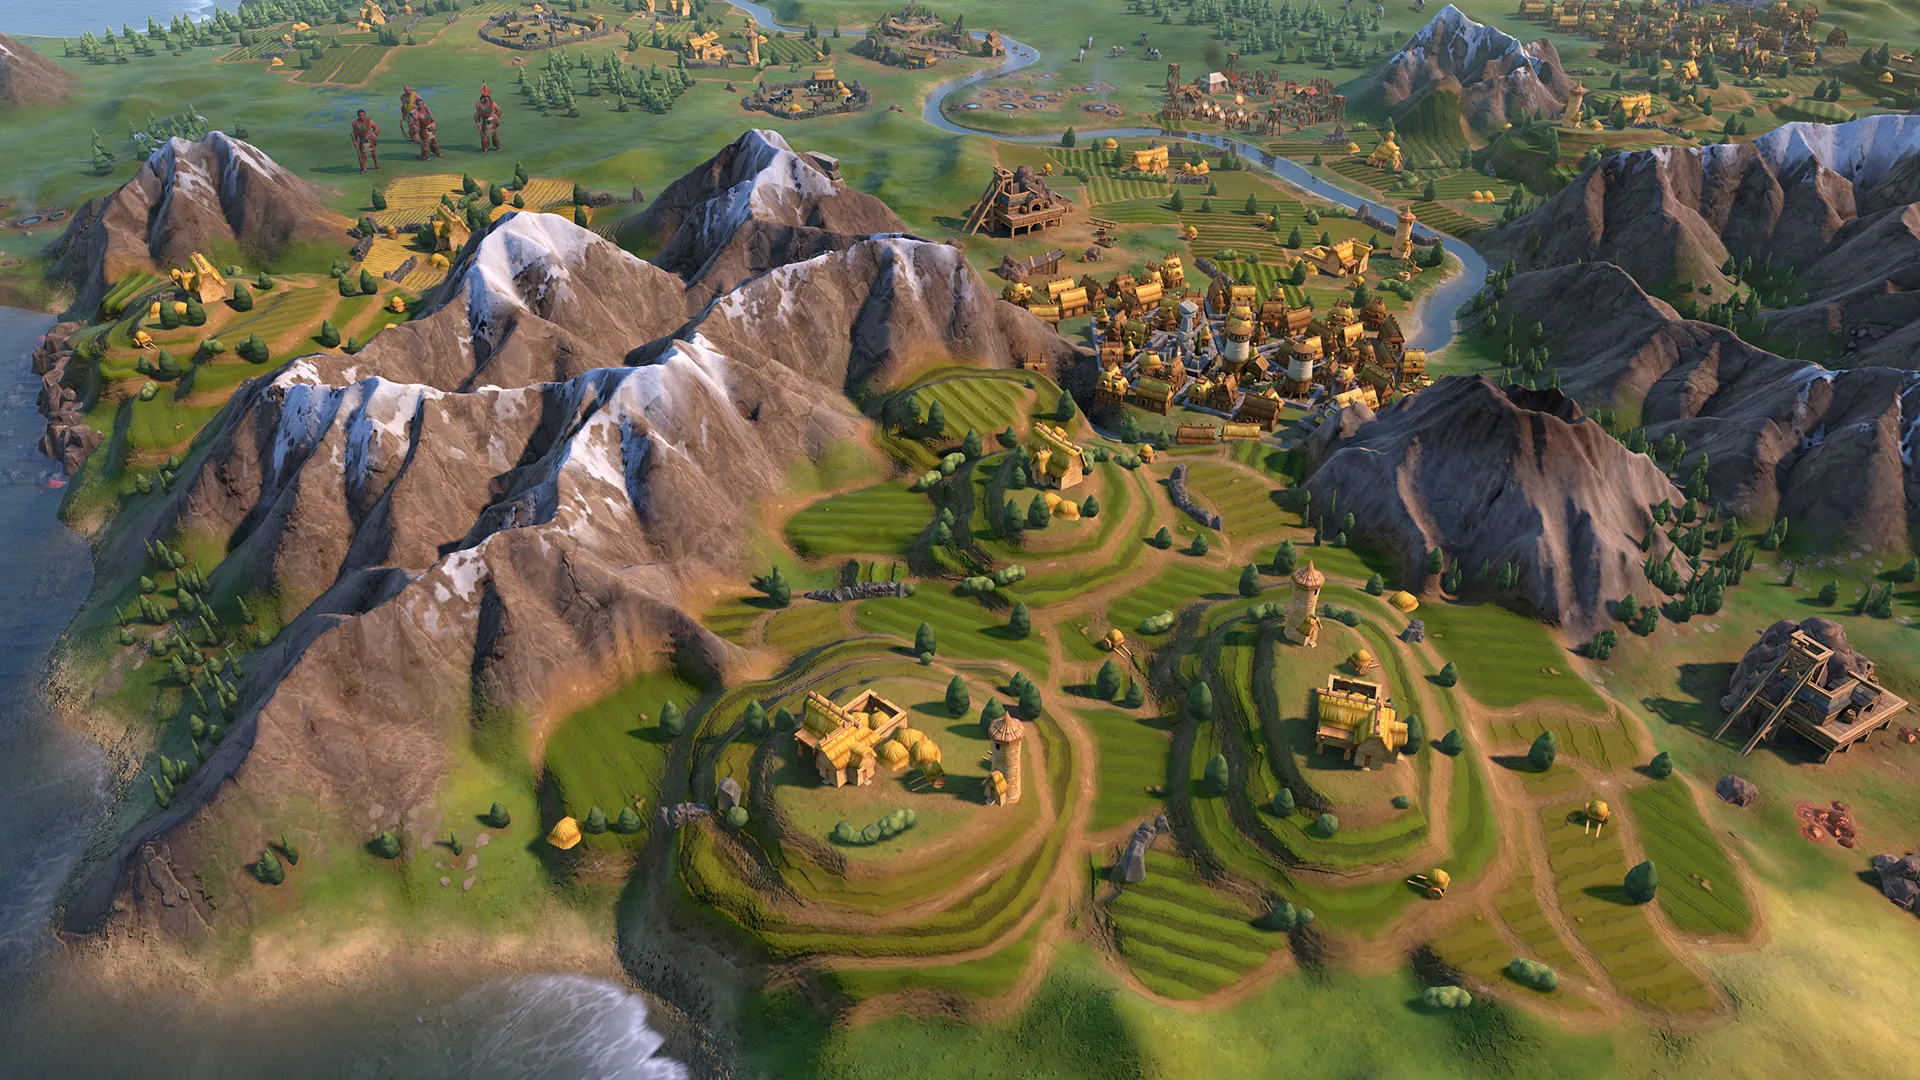 Image from Sid Meier’s Civilization VI, from civilisation.com